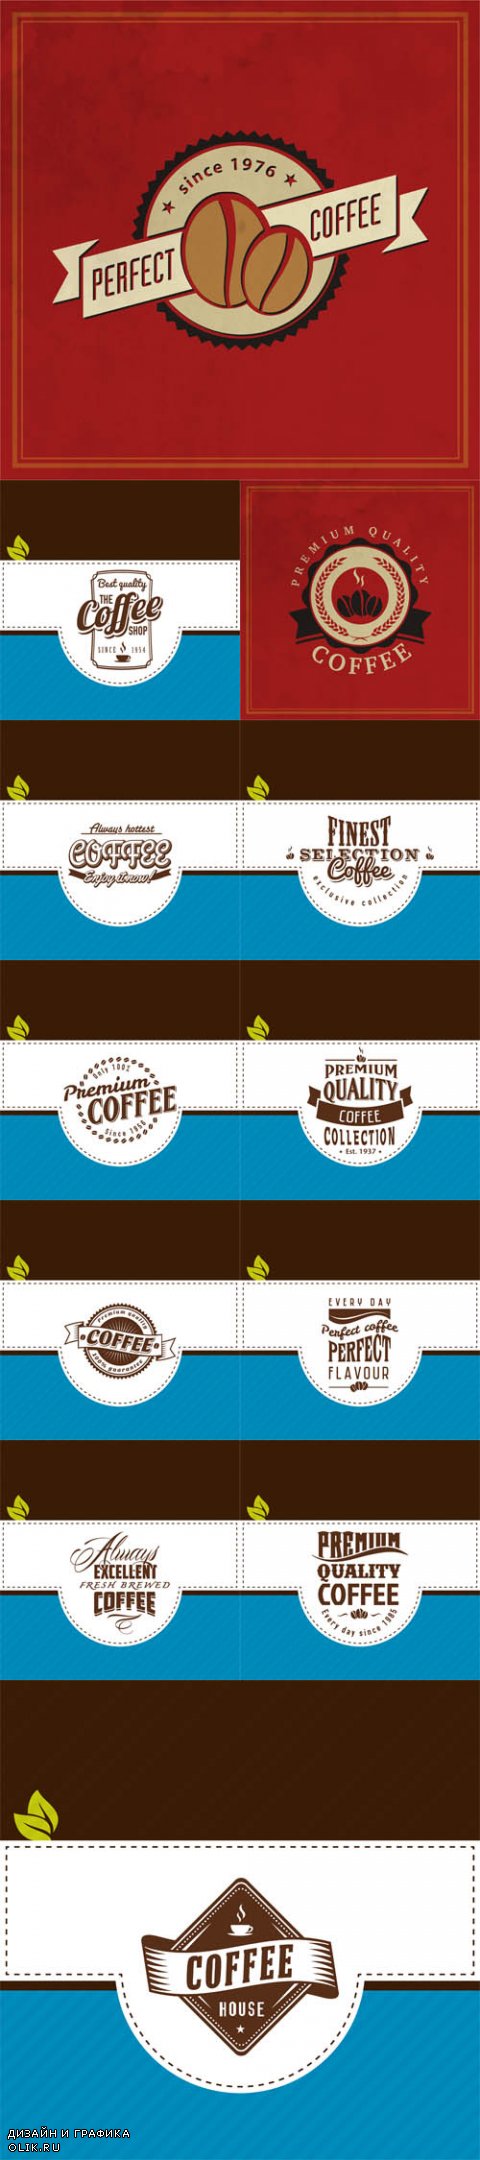 Vector Coffee Shop Logo Design Element in Vintage Style